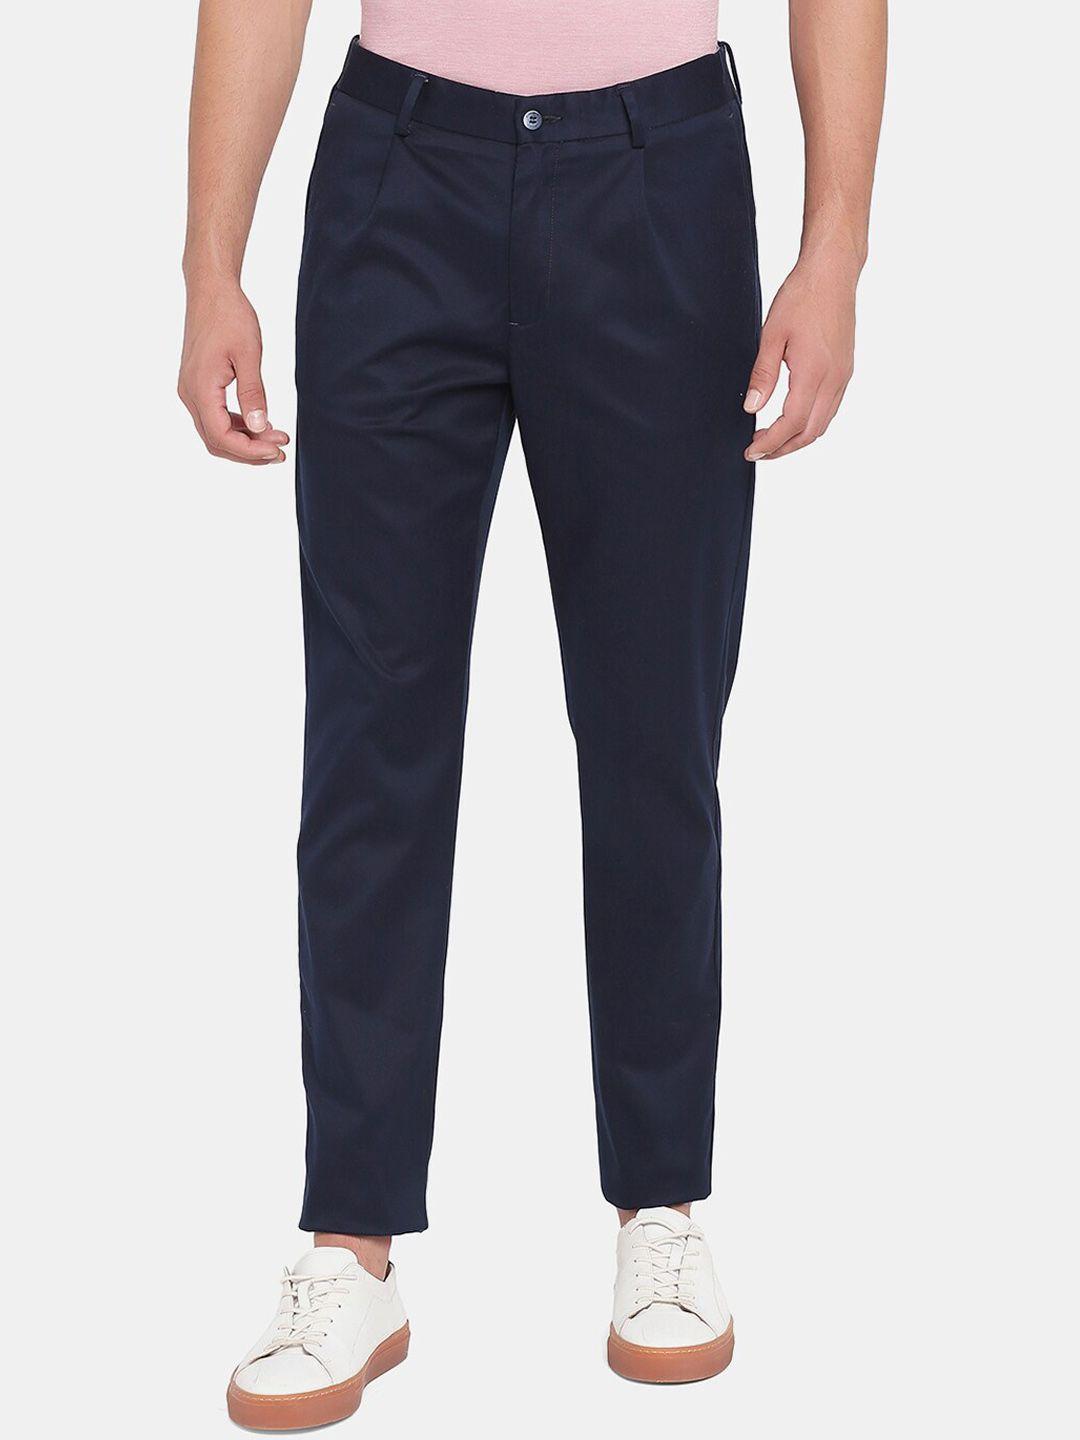 blackberrys men navy blue comfort trousers